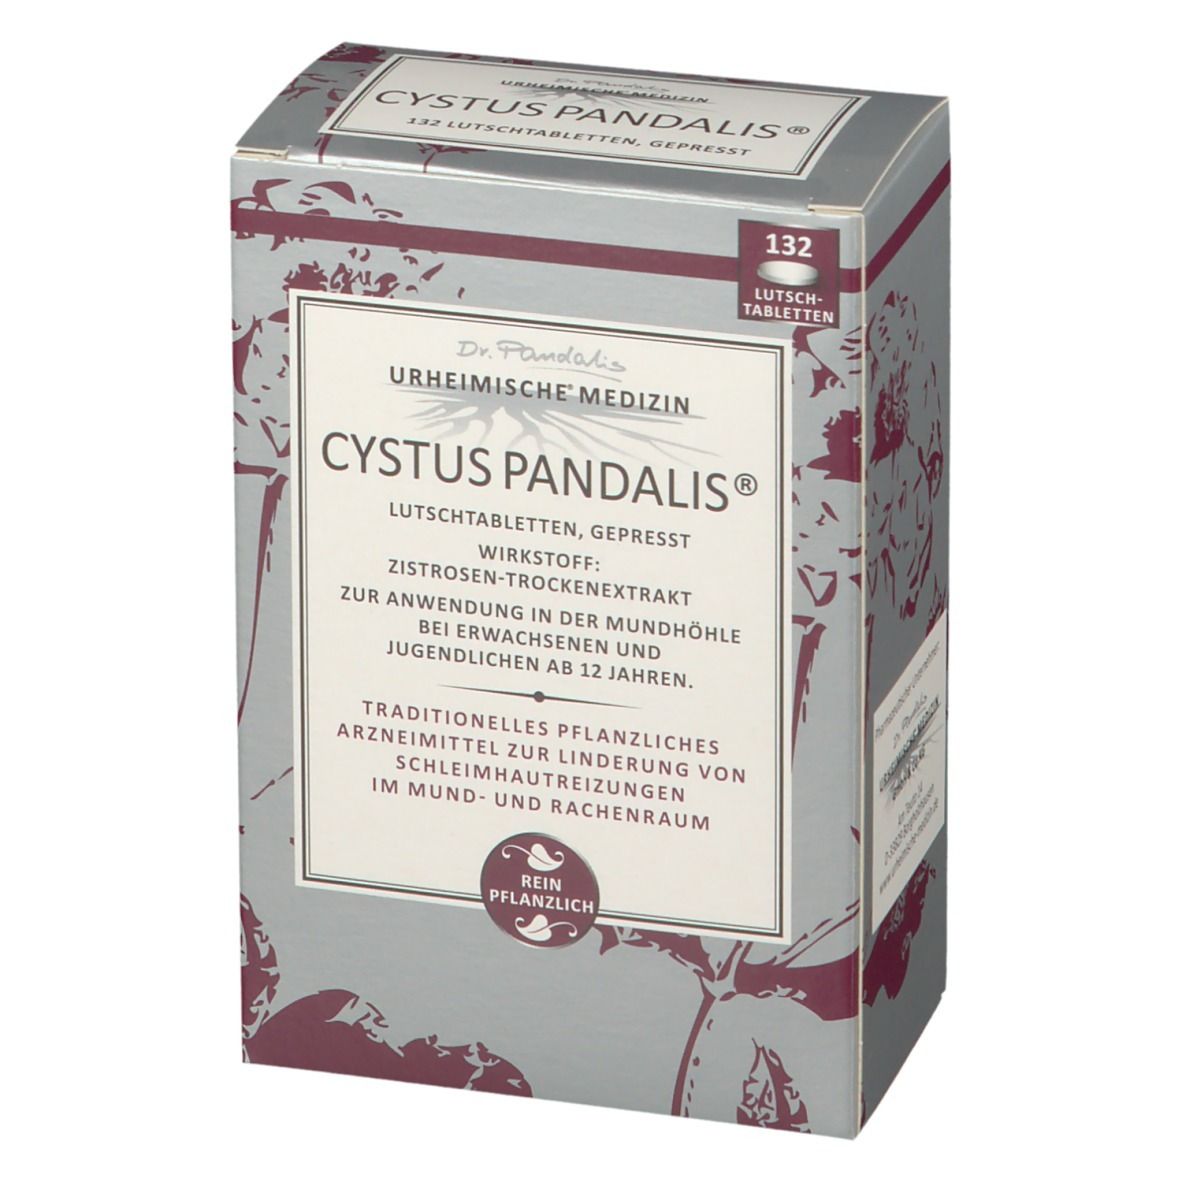 Cystus Pandalis® Lutschtabletten